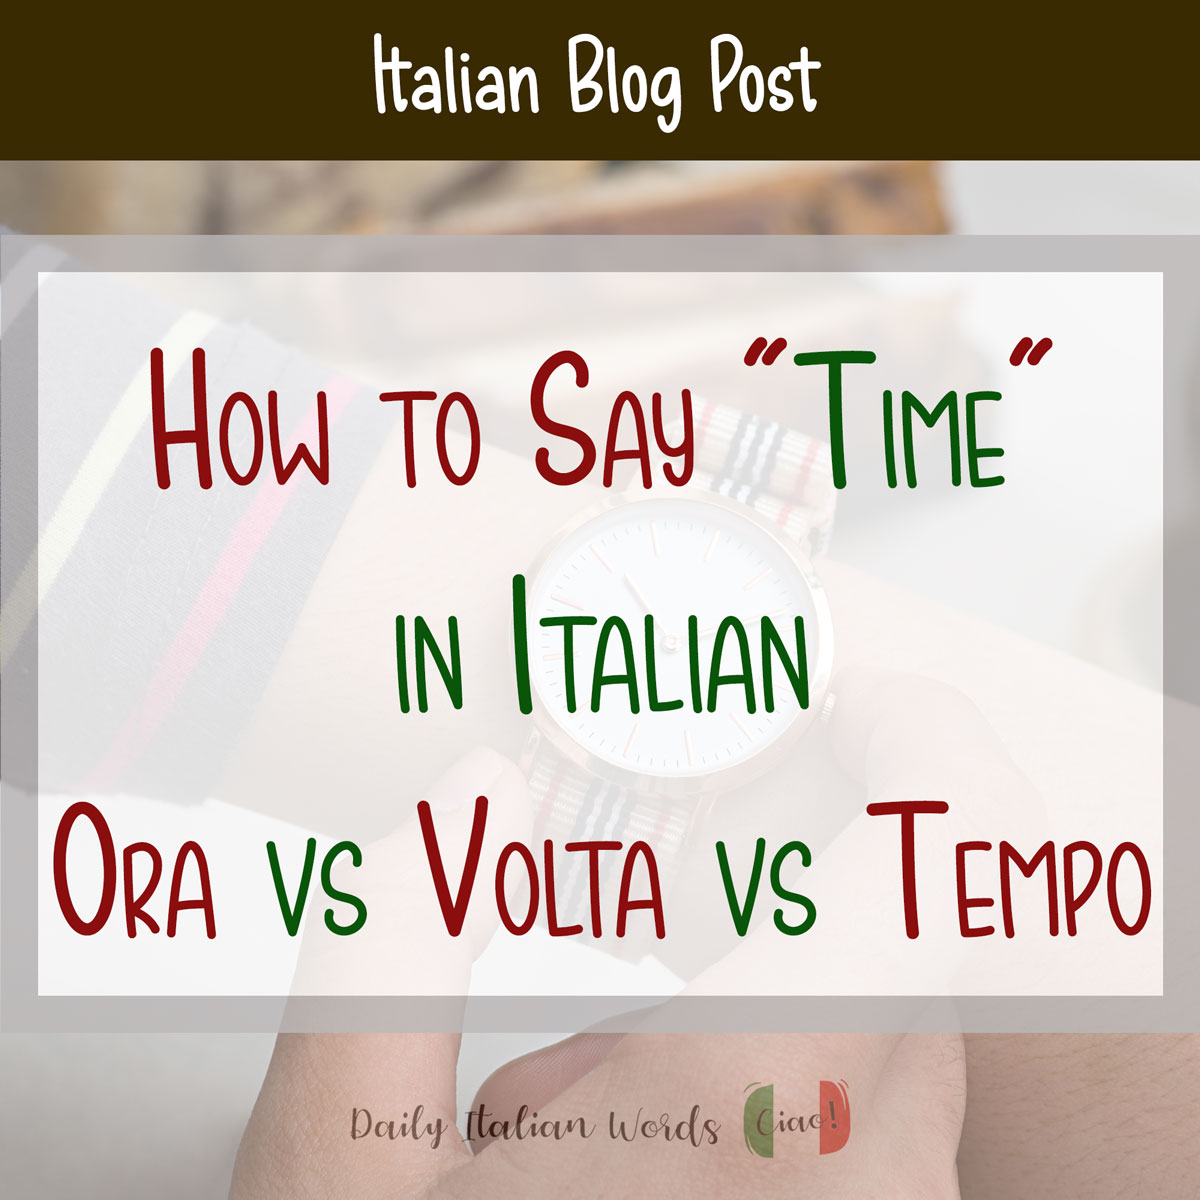 How to Say “Time” in Italian – Ora vs Volta vs Tempo